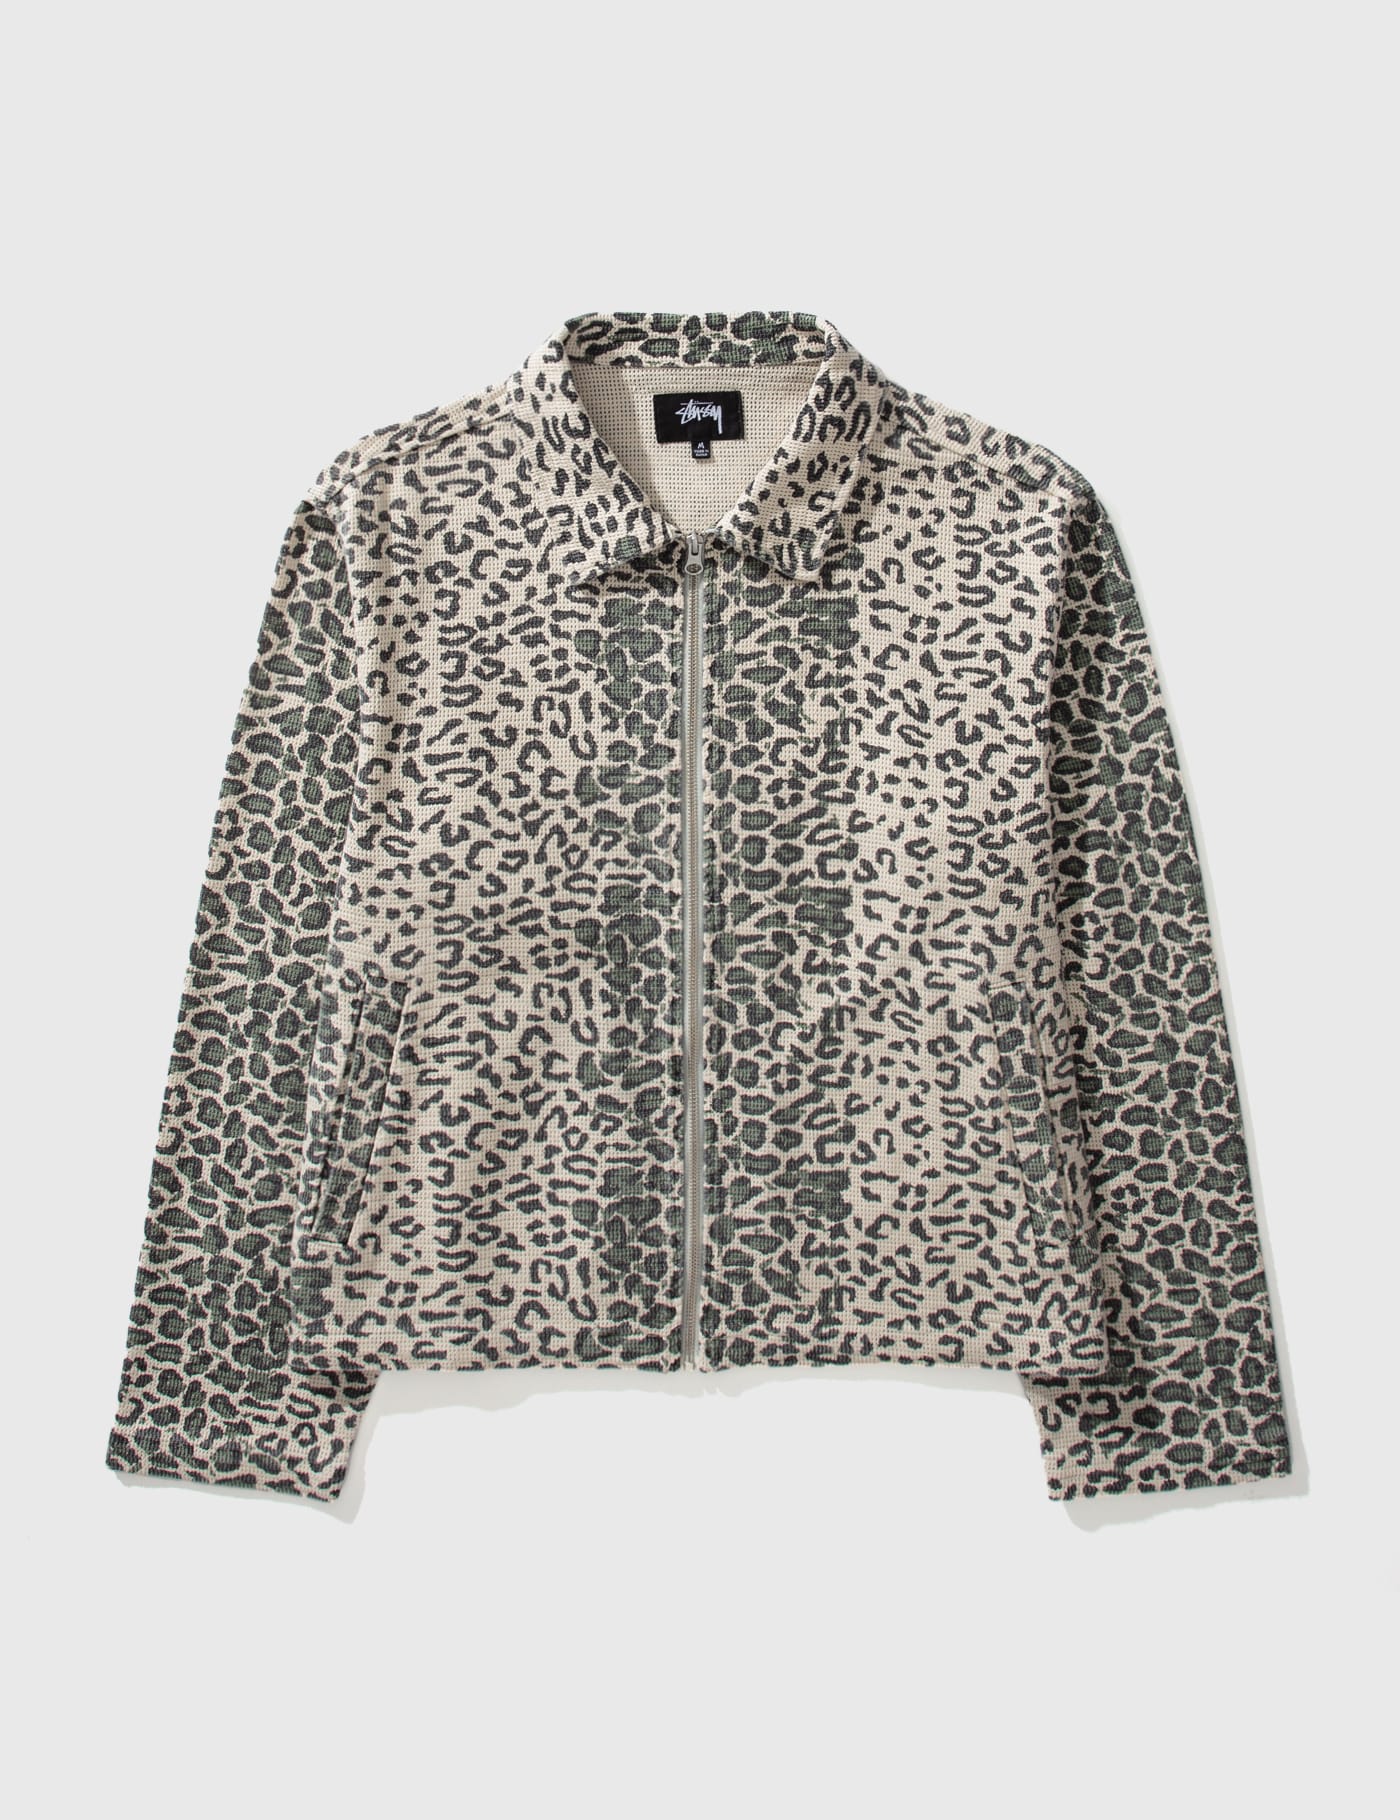 Stüssy - Leopard Mesh Zip Jacket | HBX - Globally Curated Fashion